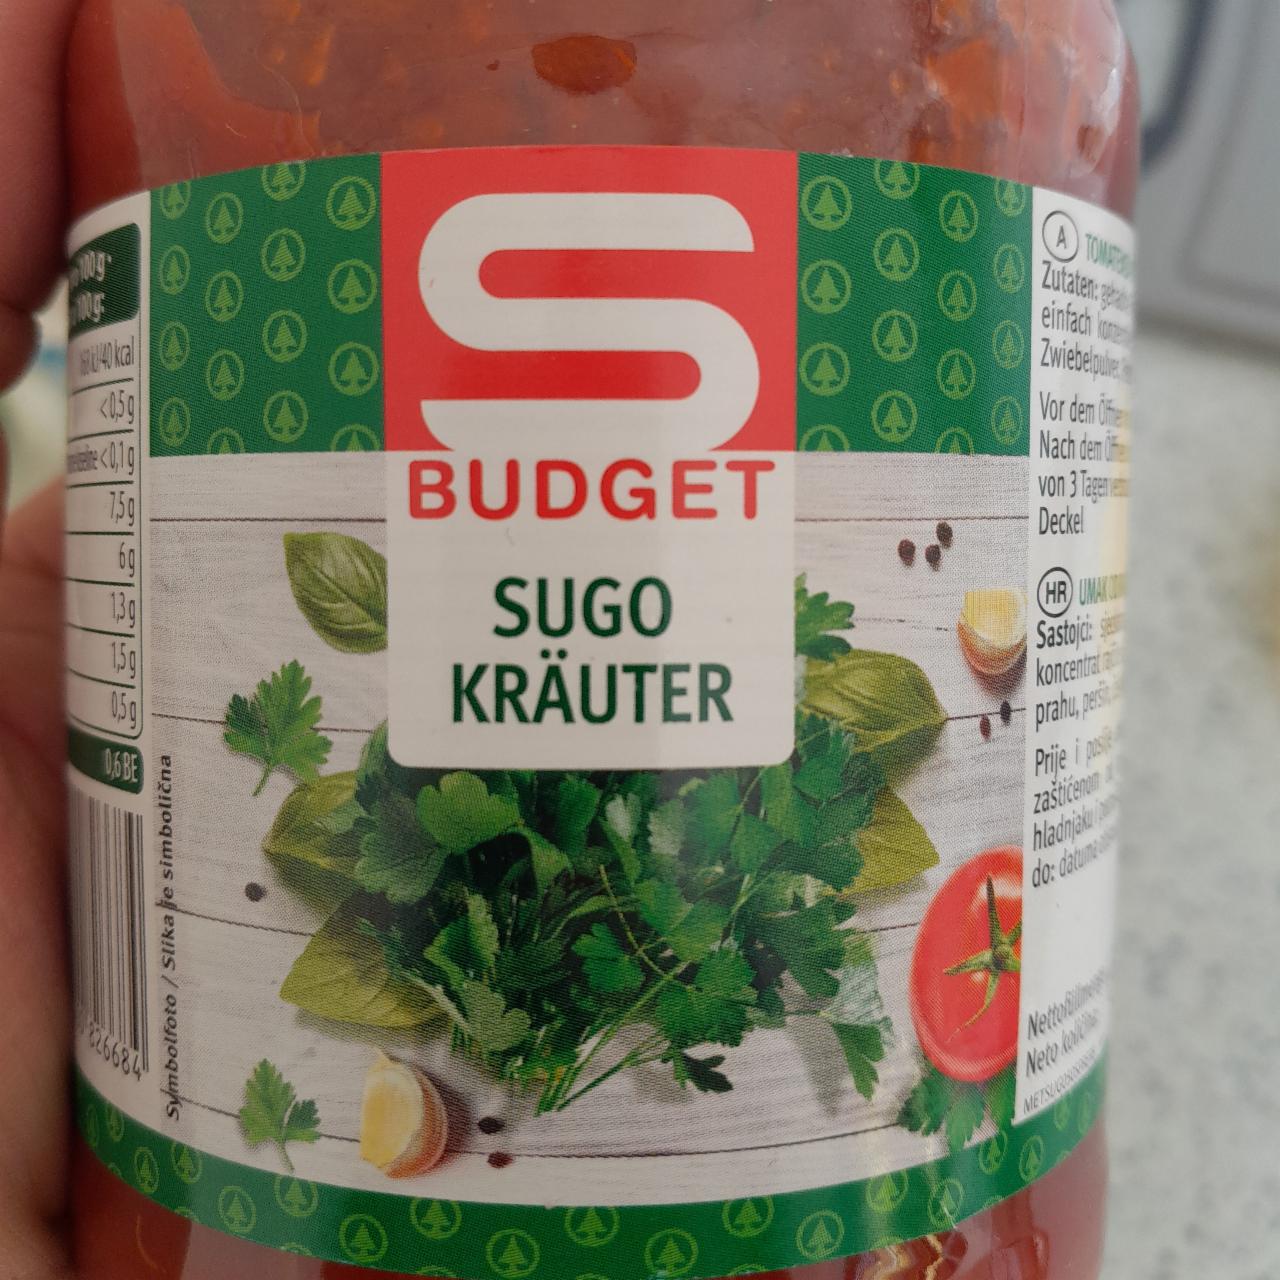 Fotografie - Sugo Kräuter S Budget